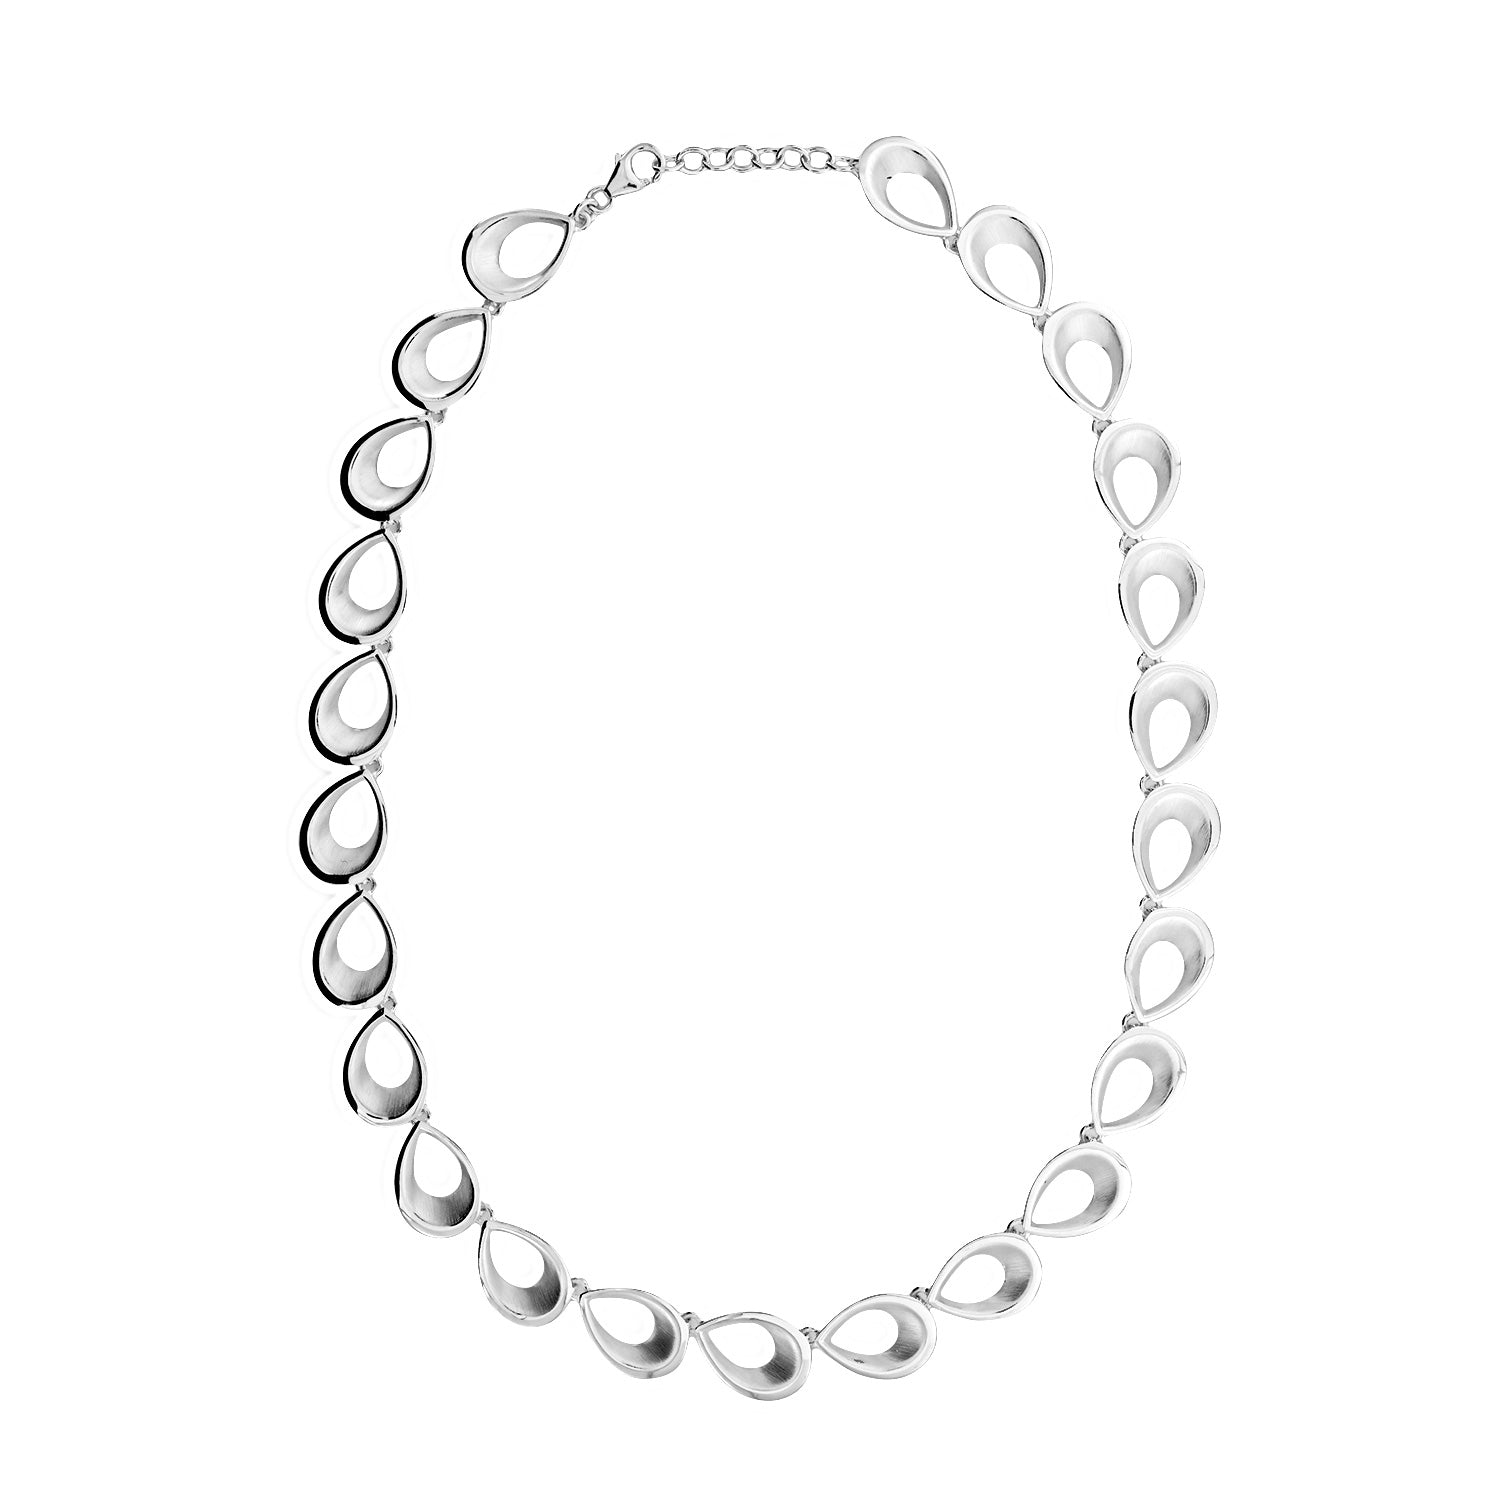 Silver Teardrops Necklace